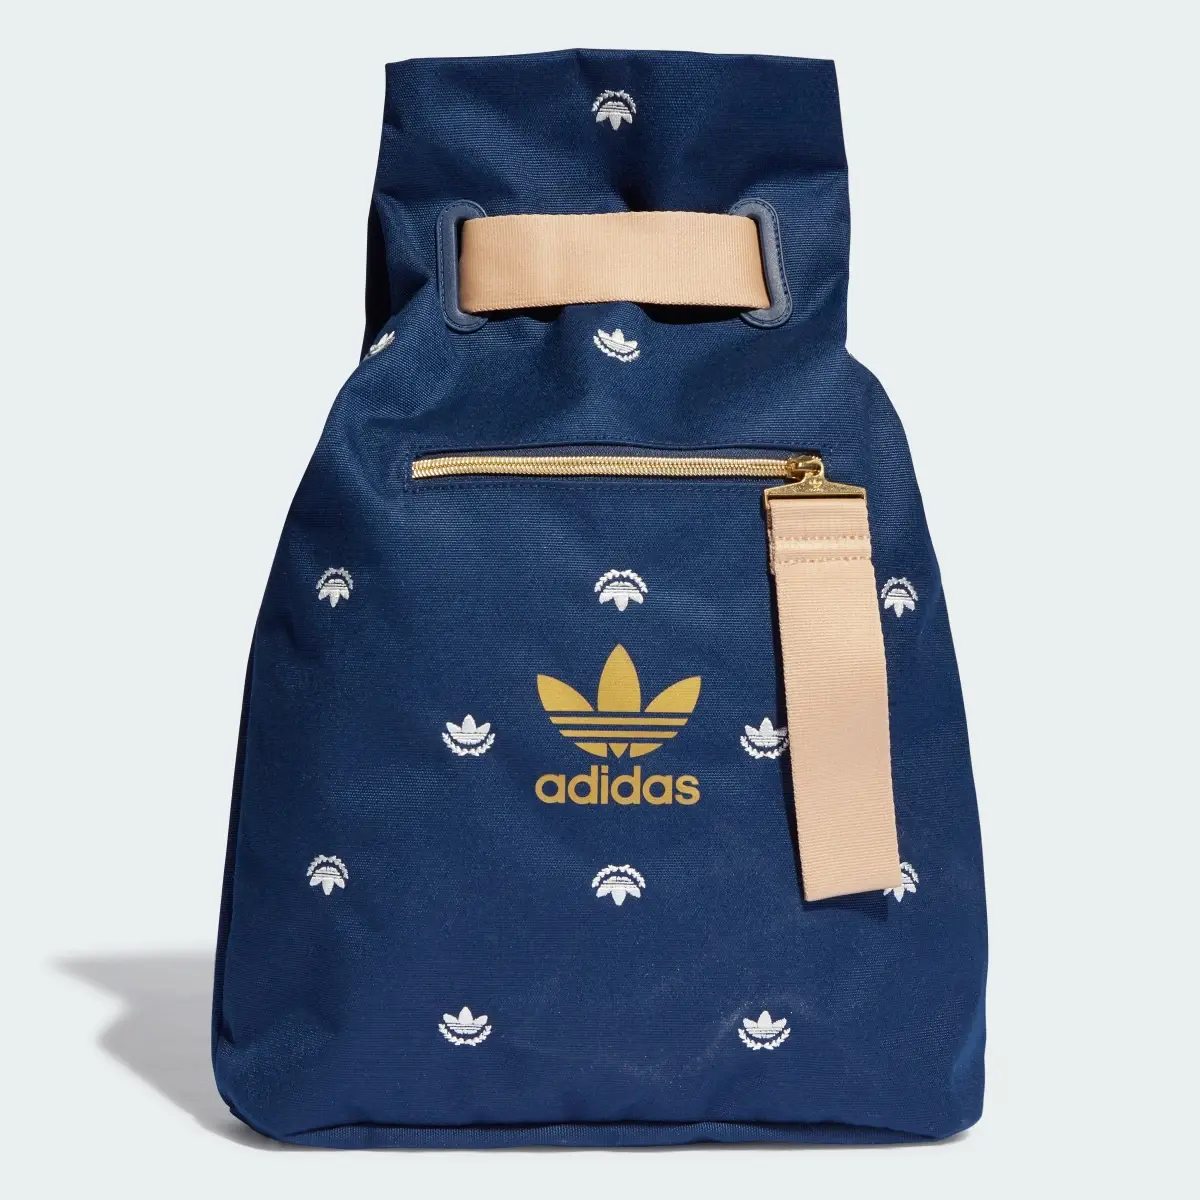 Adidas Trefoil Crest Bucket Backpack. 1